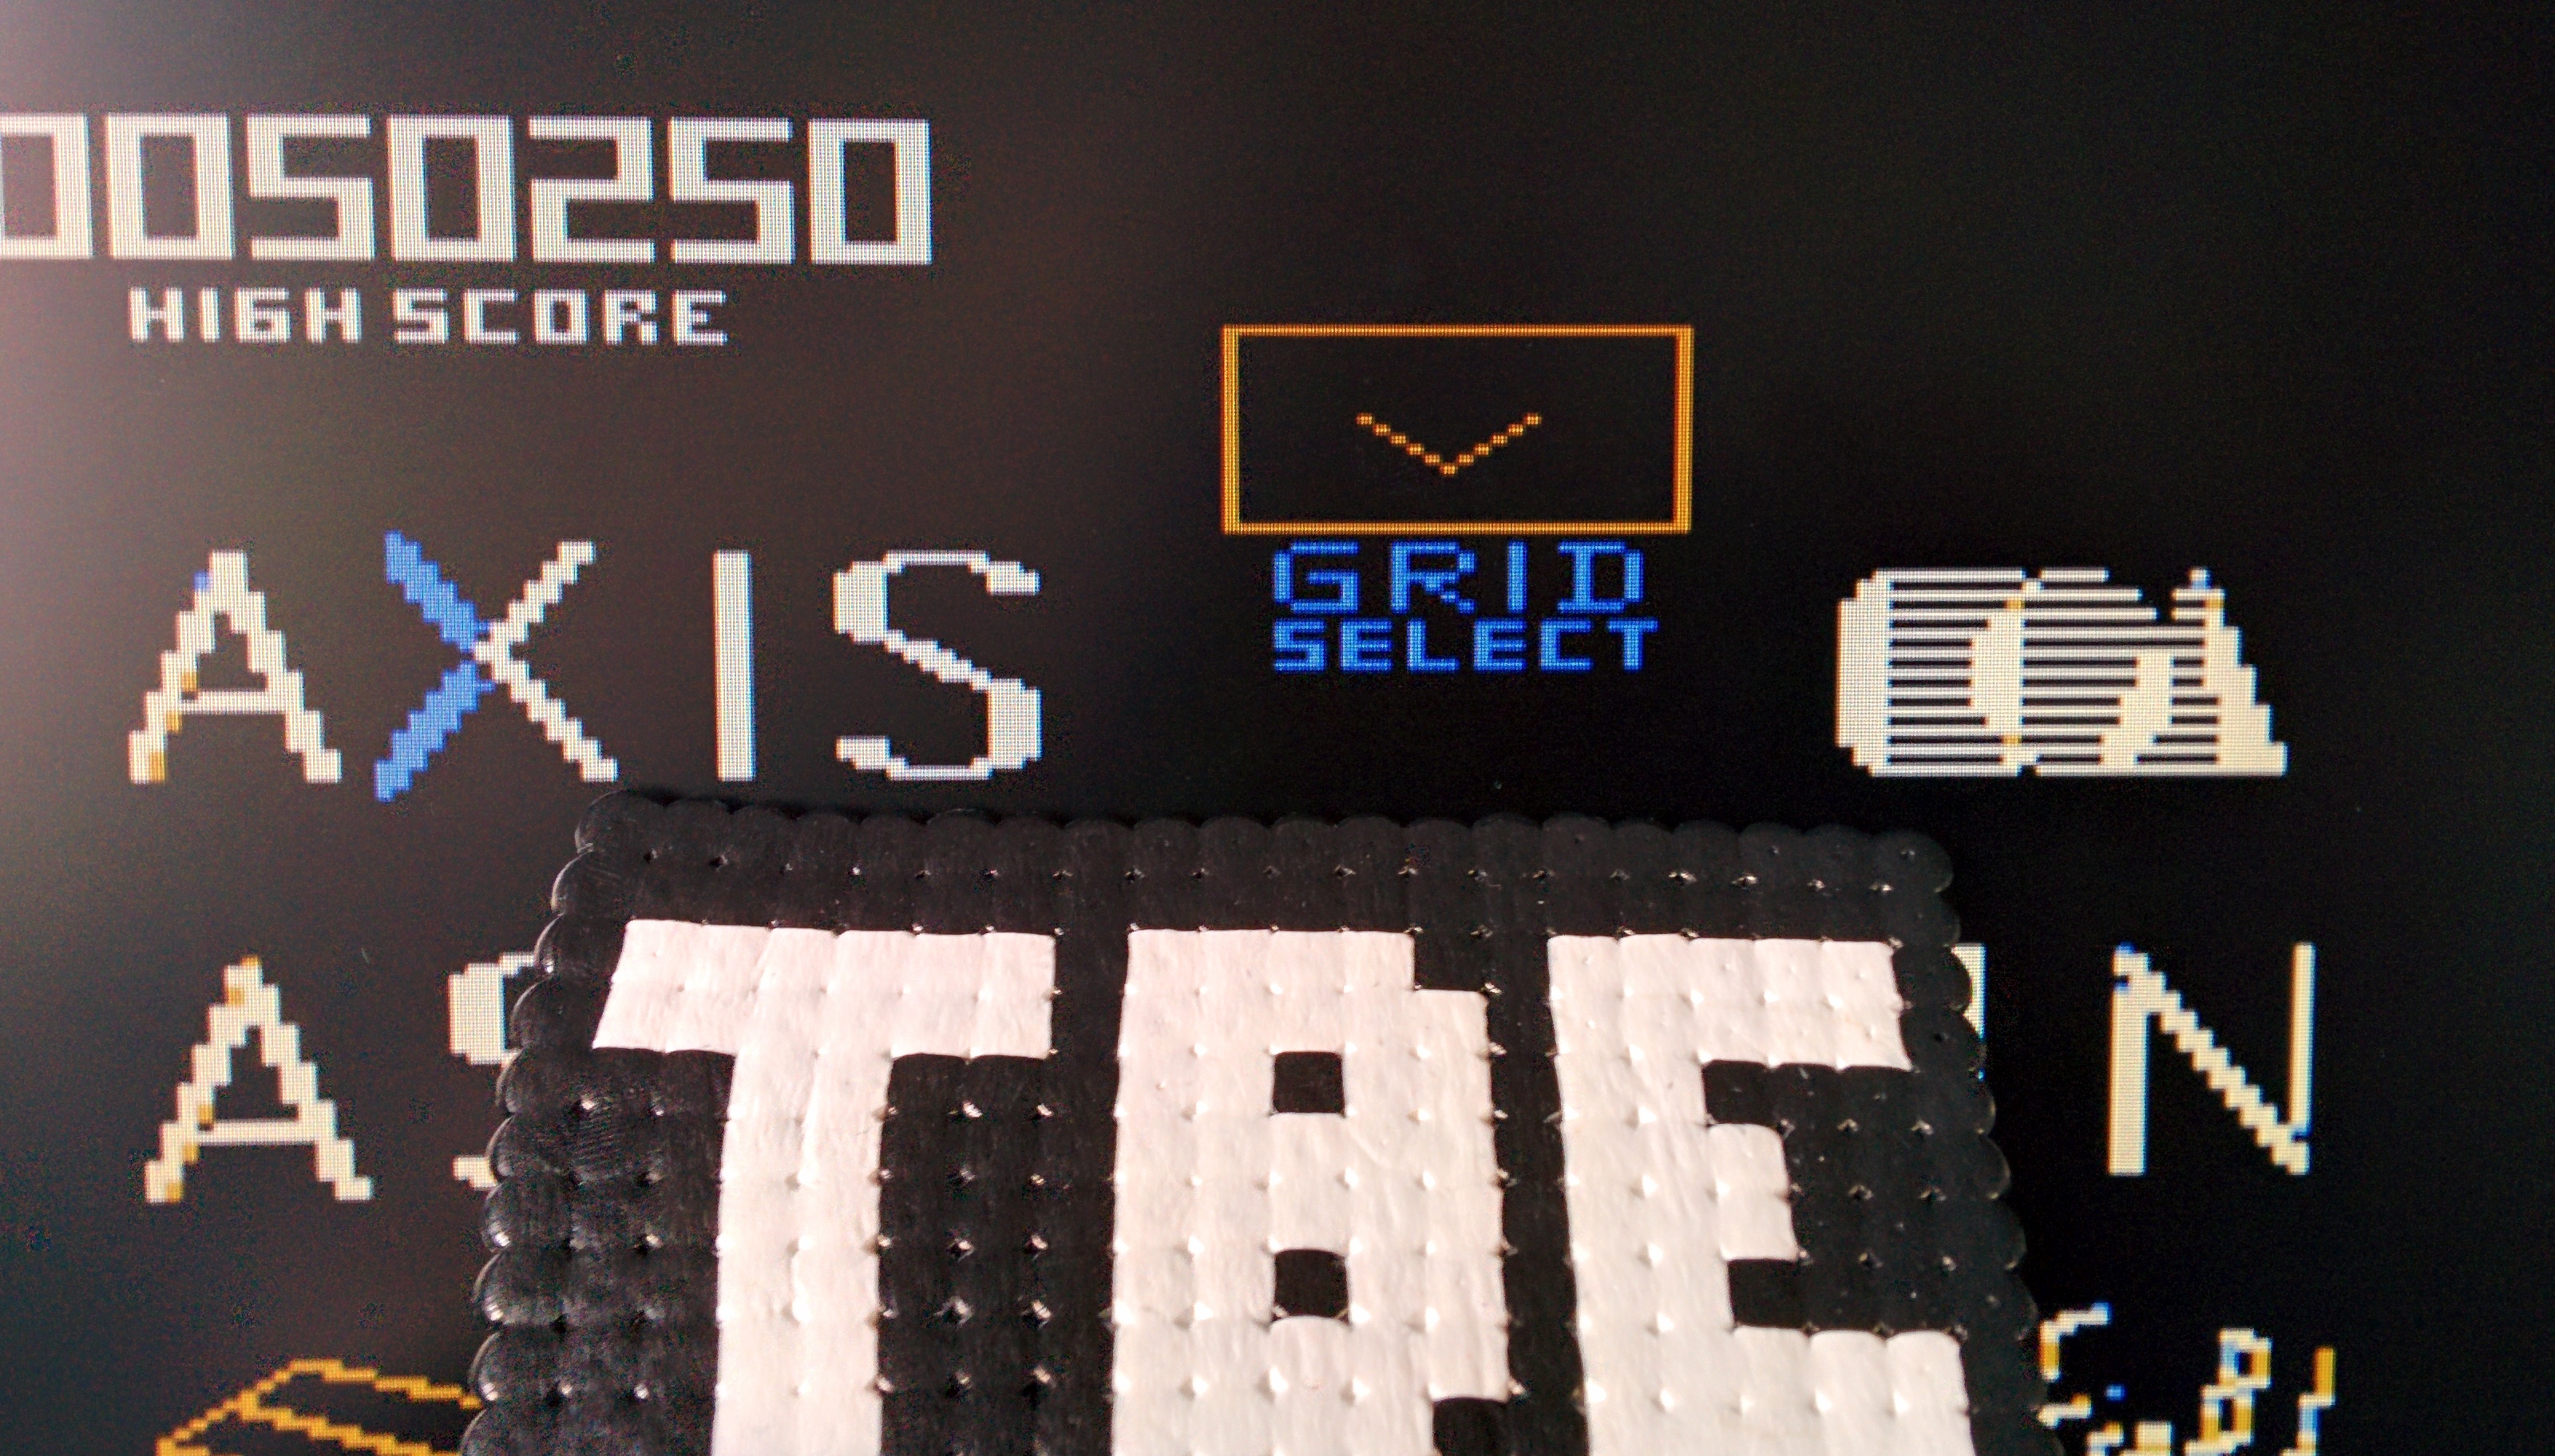 Sixx: Axis Assassin: Medium Spider (Atari 400/800/XL/XE Emulated) 50,250 points on 2014-10-28 06:14:50